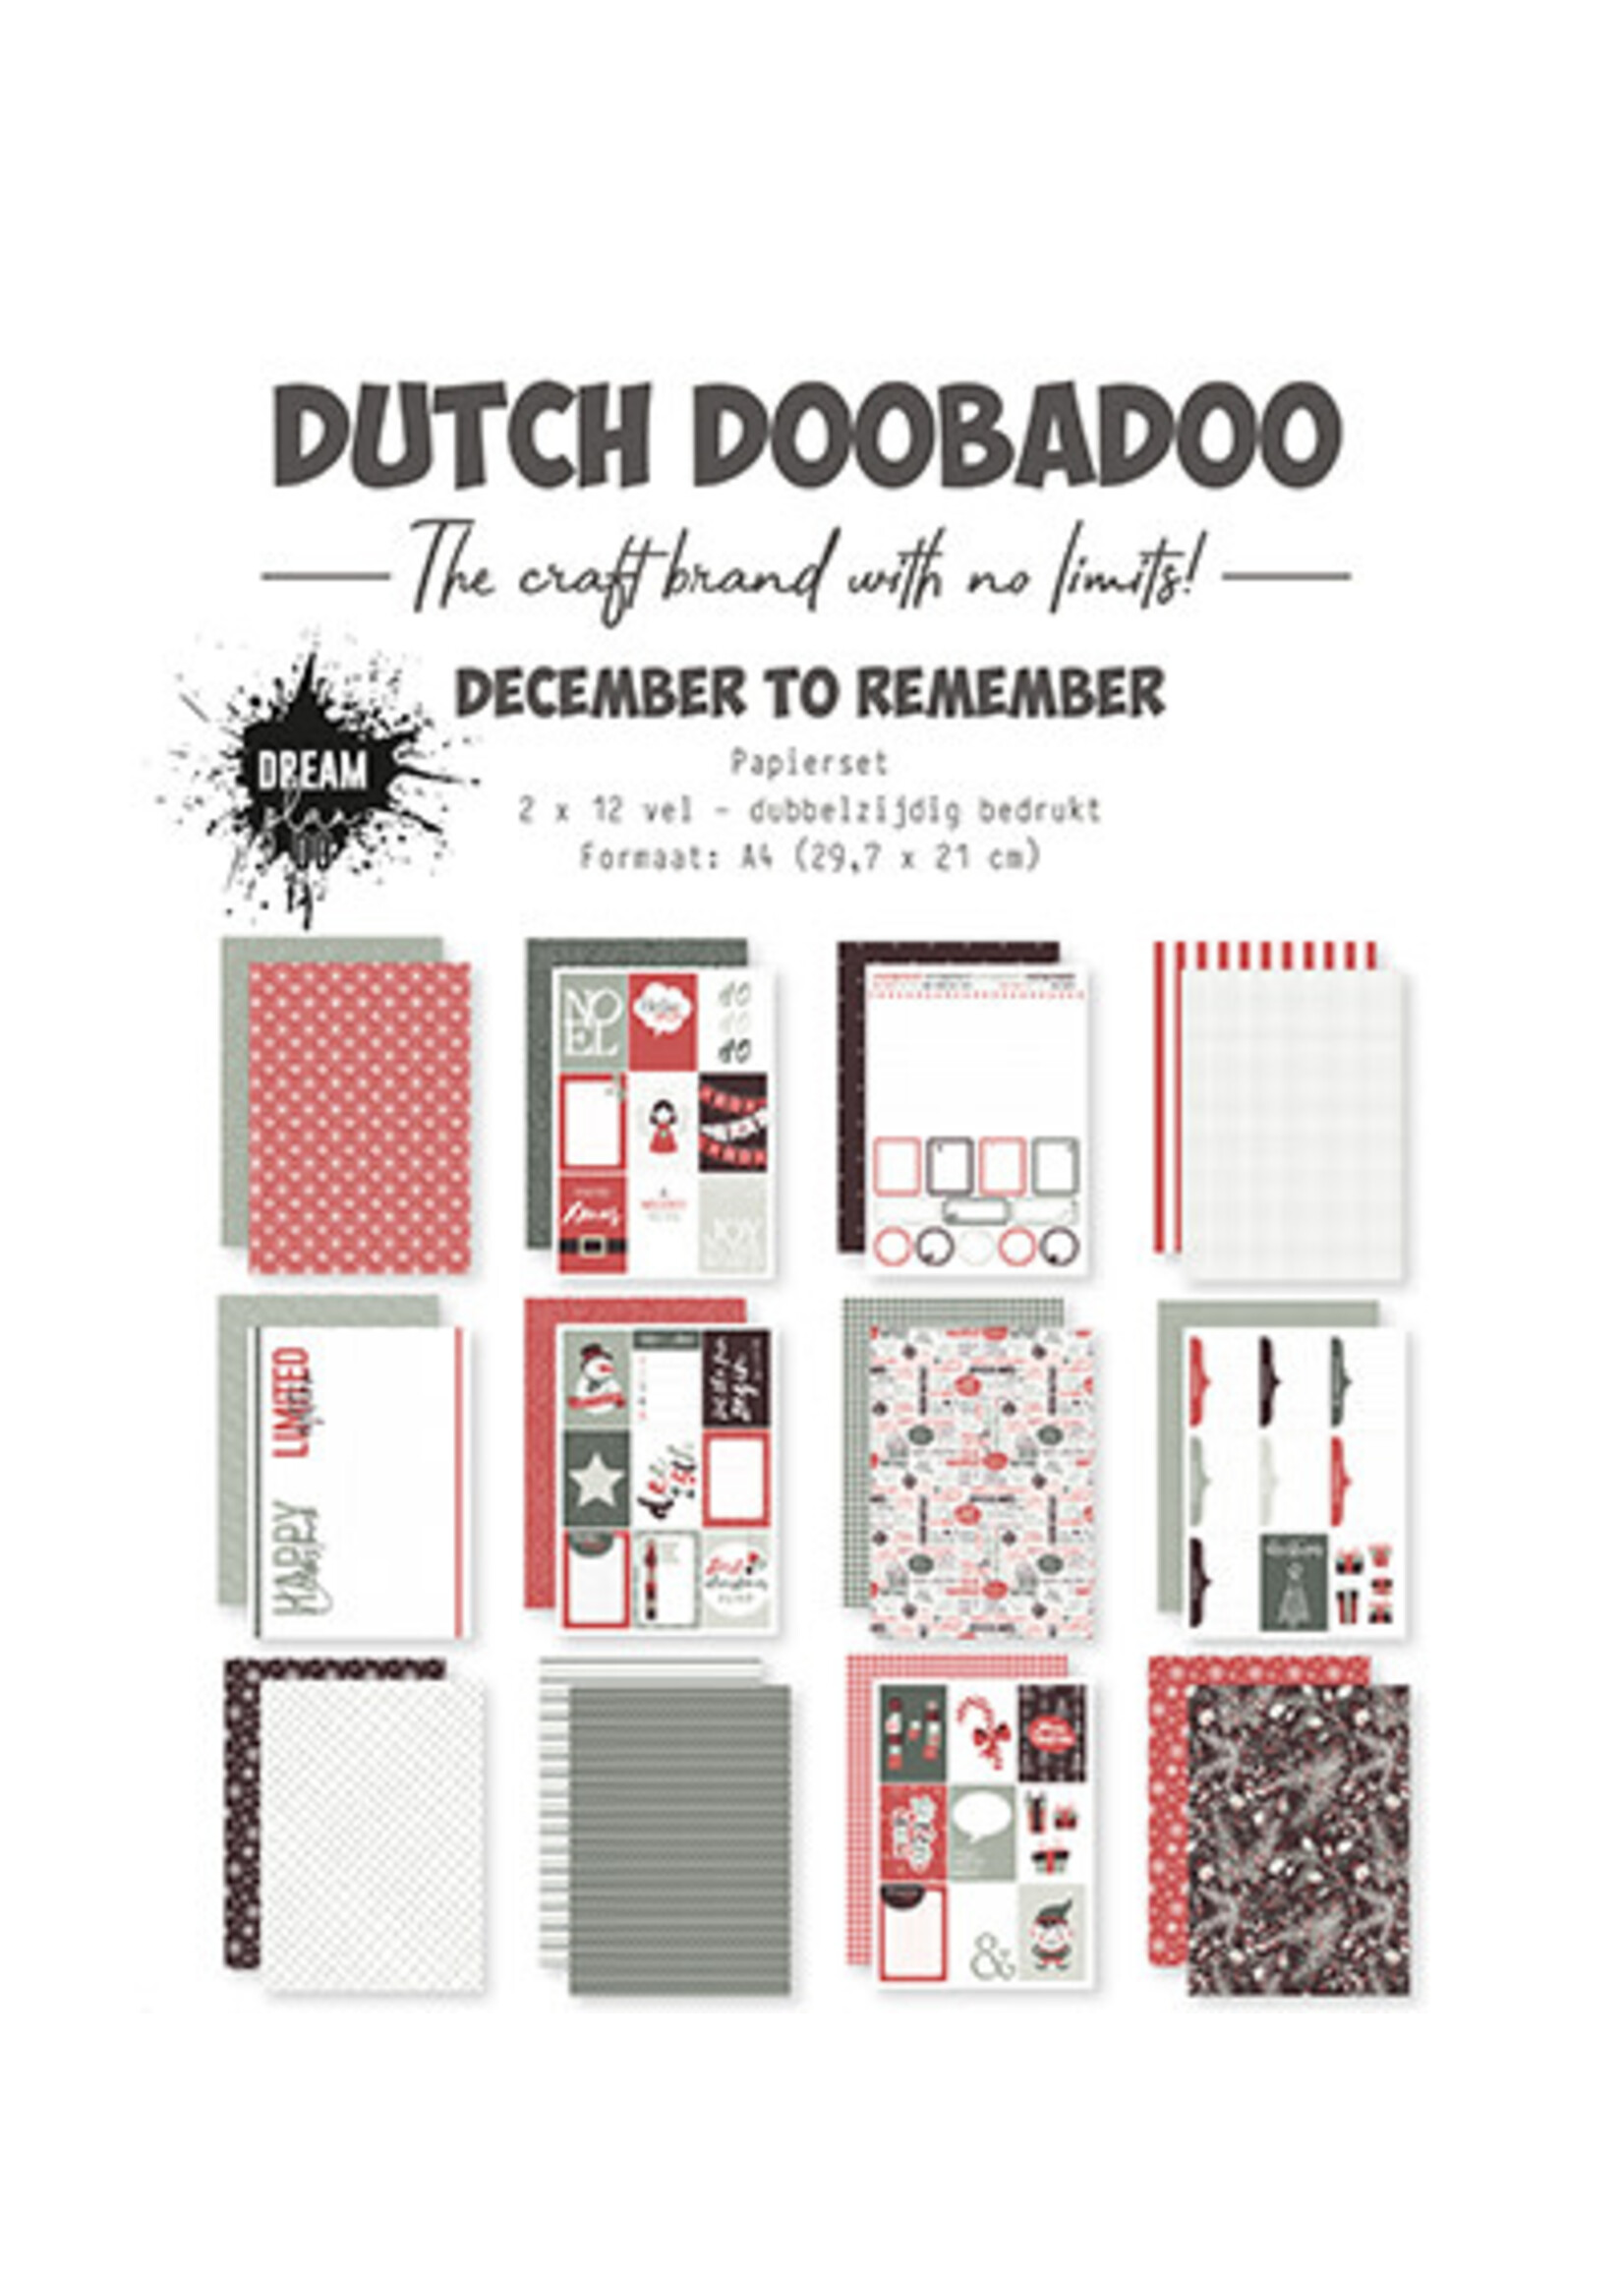 Dutch Doobadoo 473.005.052 - Papier December to remember